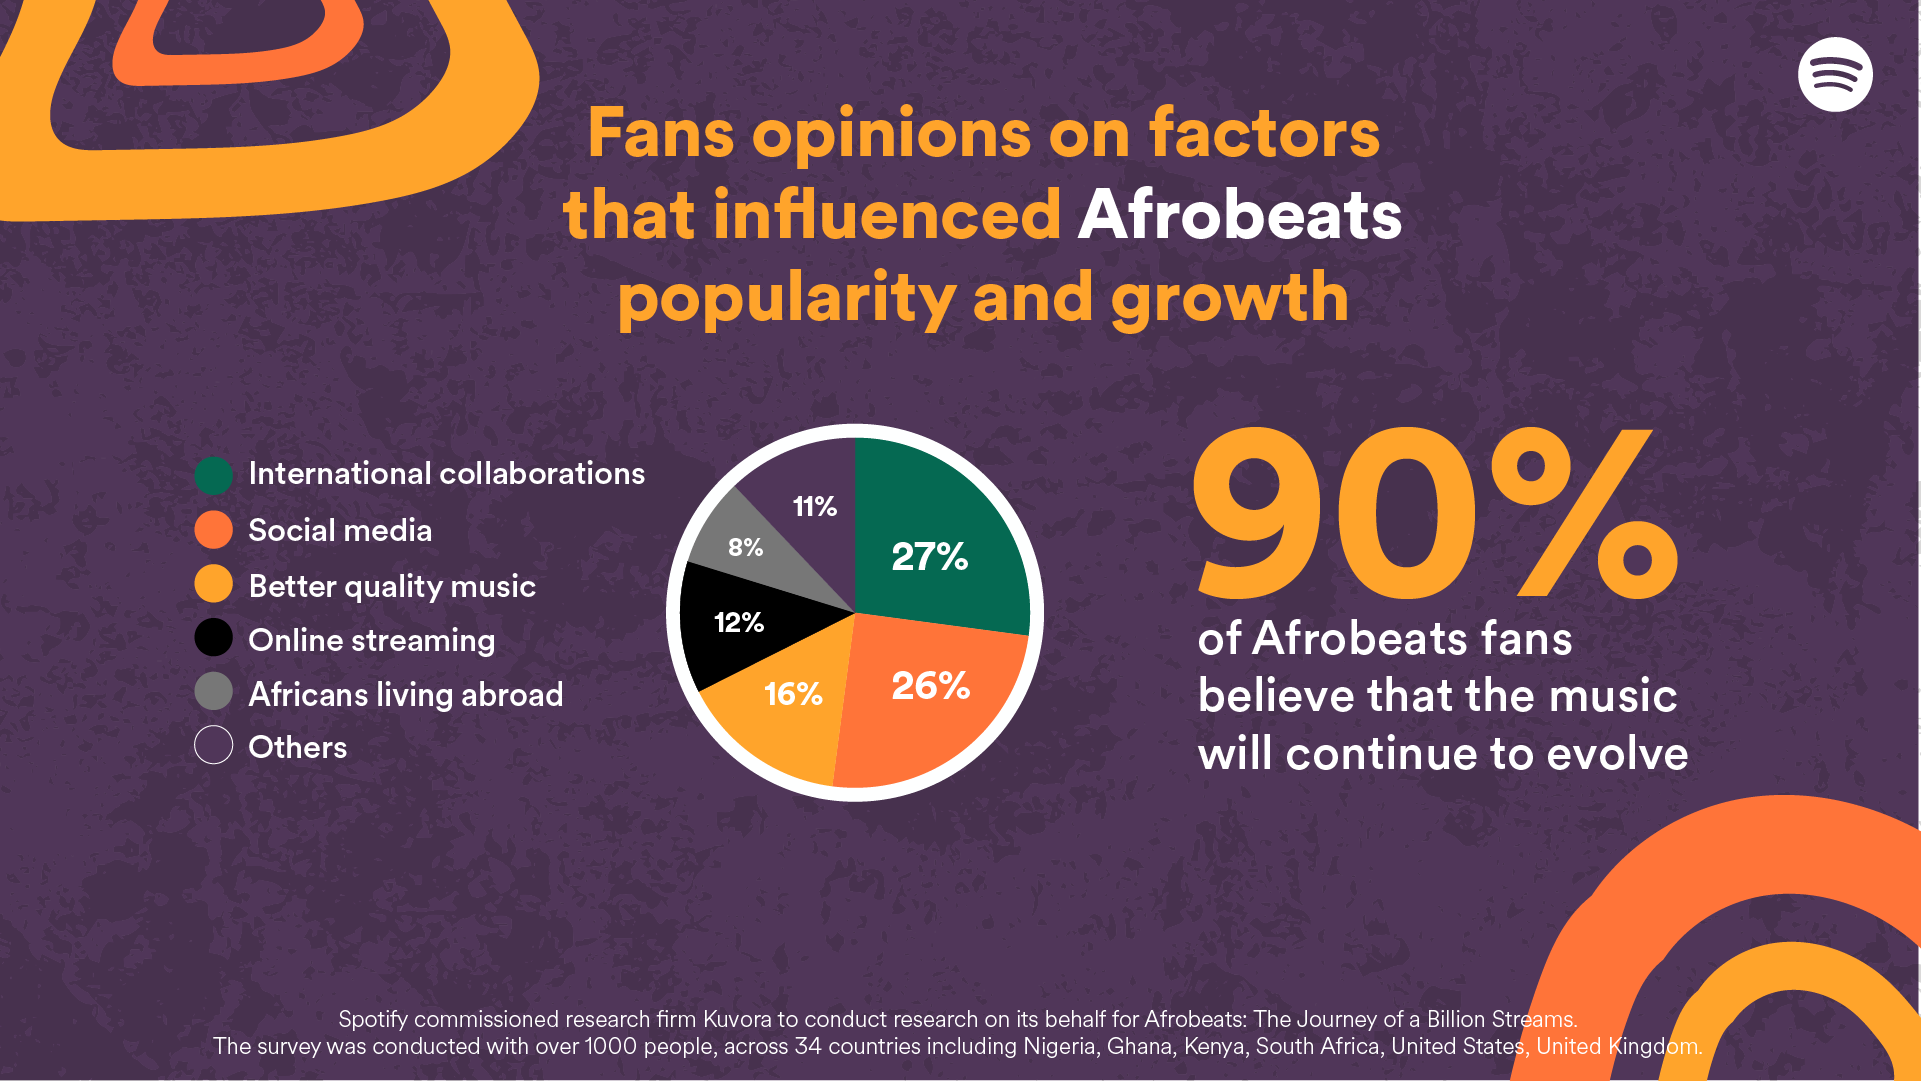 Afrobeats’ Evolution: New updates to Spotify’s Journey of a Billion Streams site